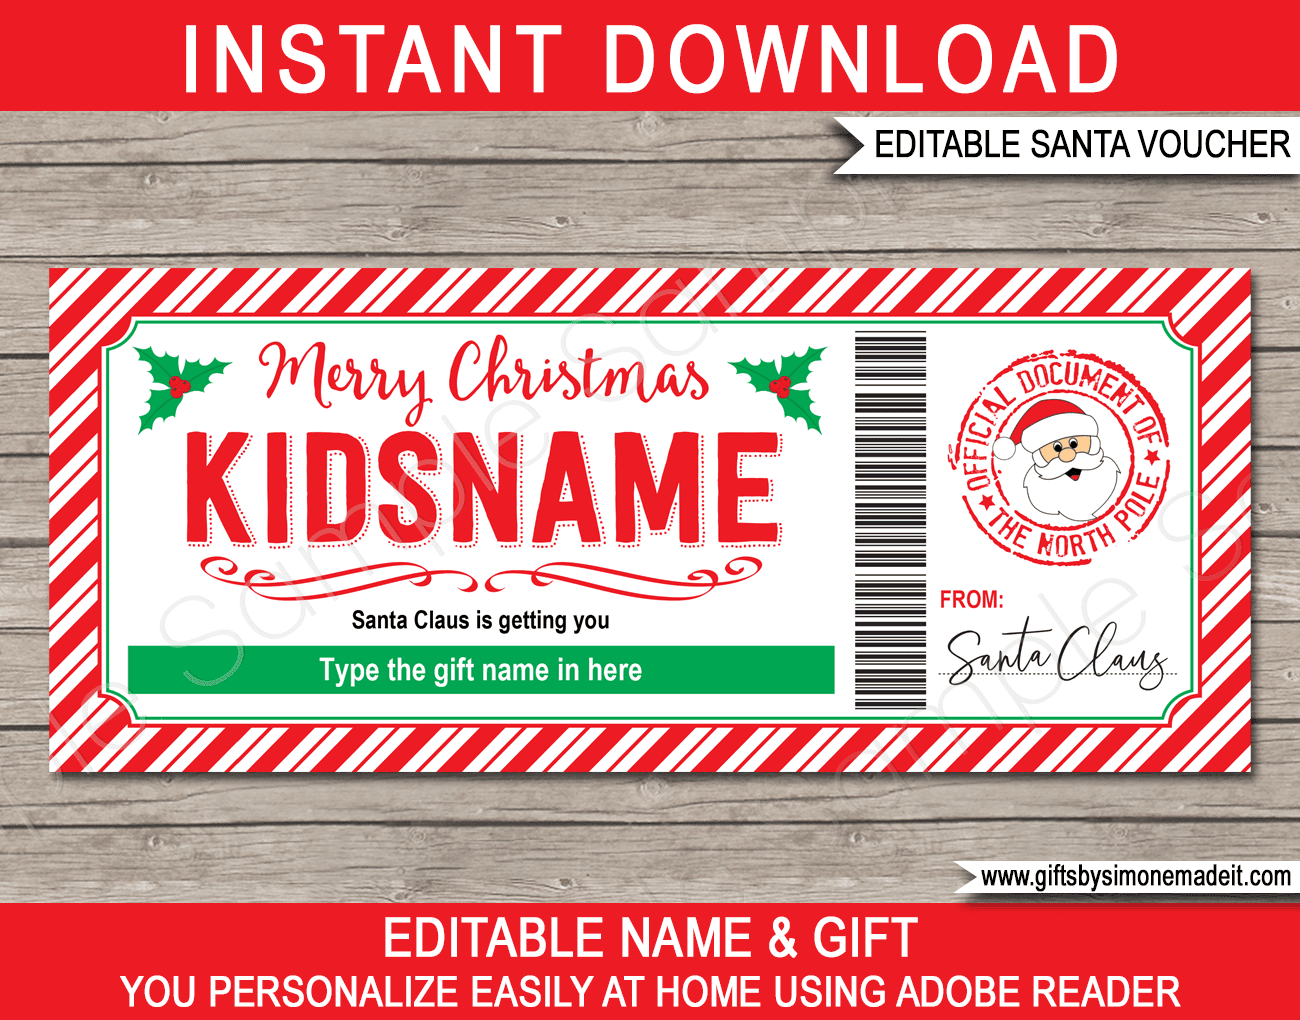 Free Printable Christmas Gift Certificate Templates